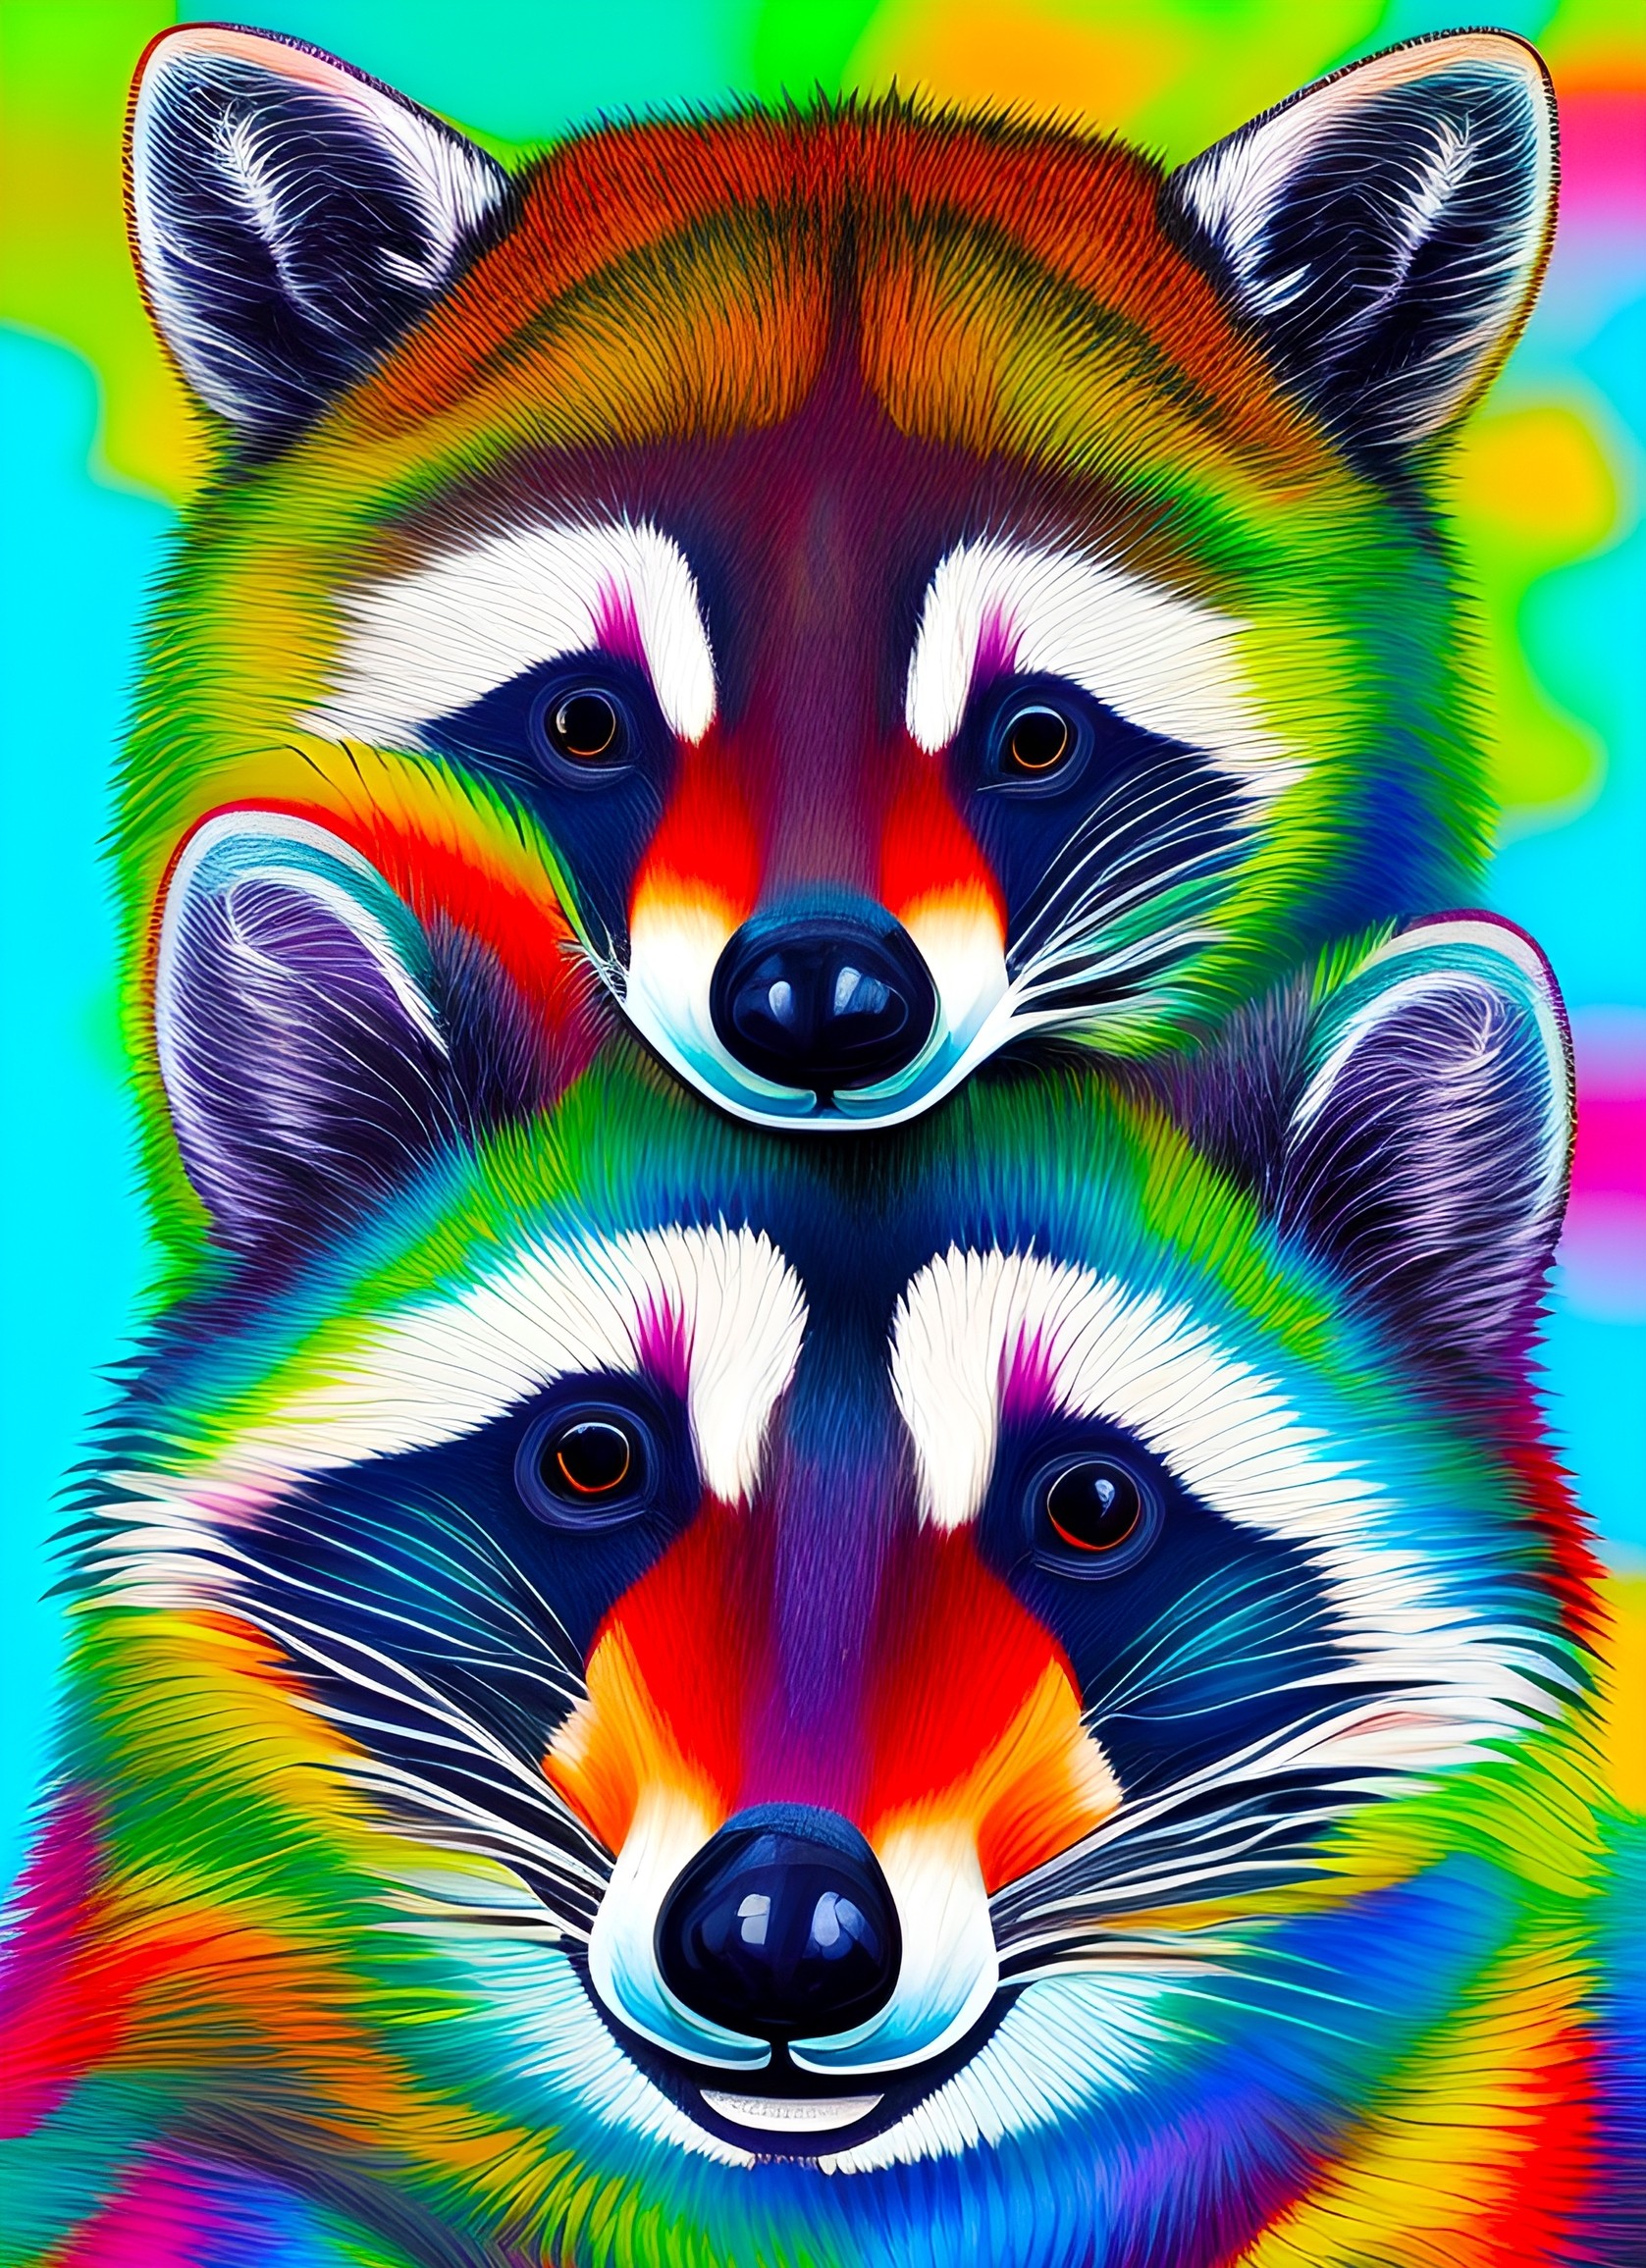 Raccoon Animal Colourful Abstract Art Blank Greeting Card